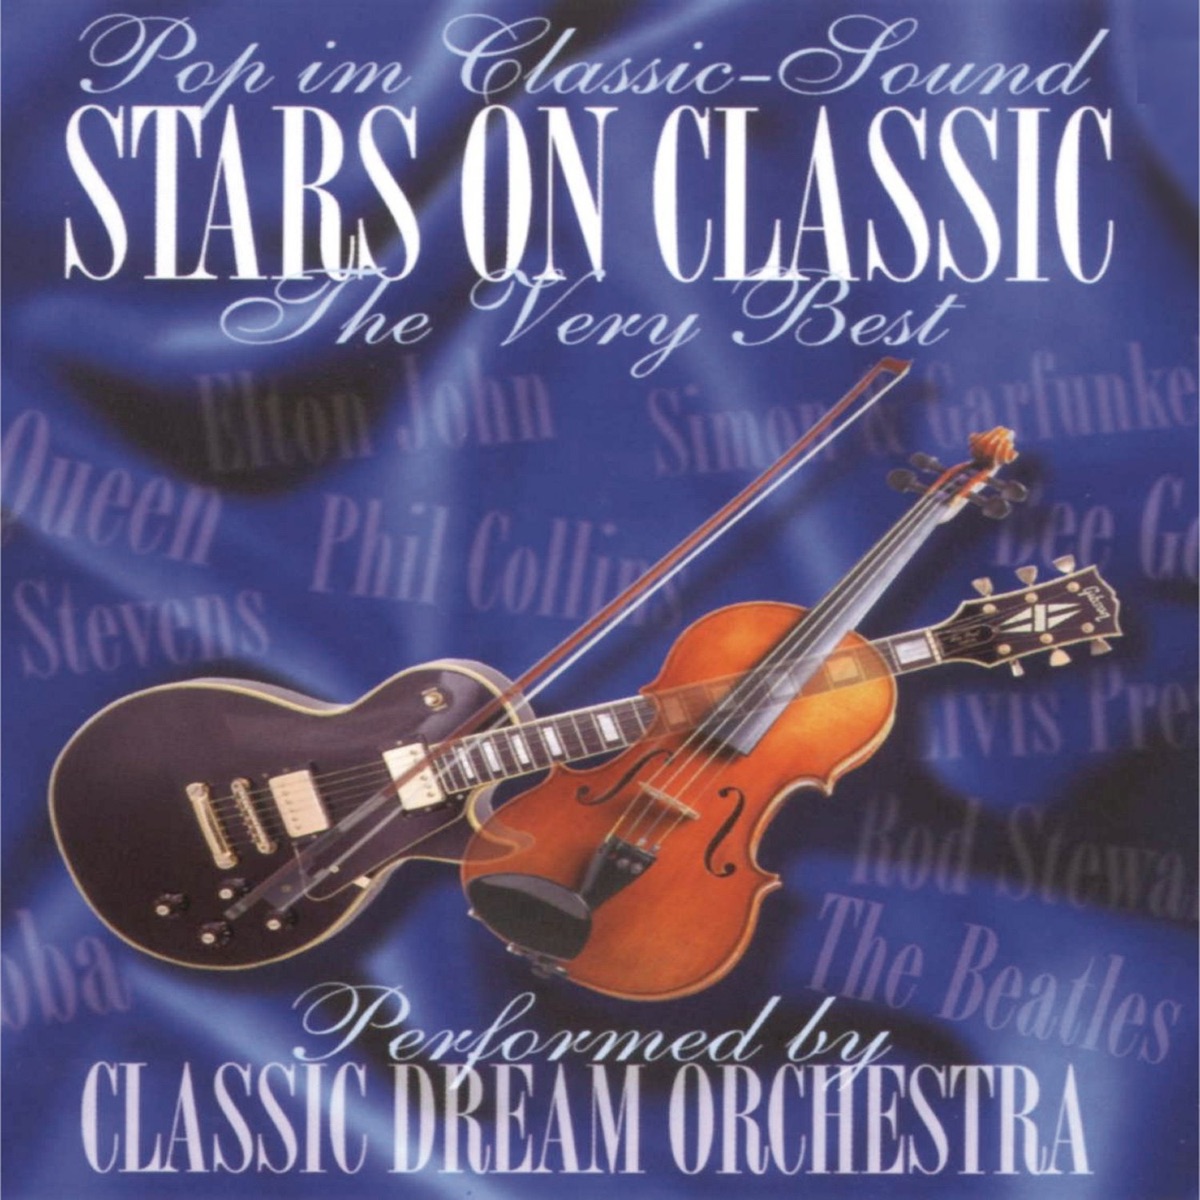 Classic Dream Orchestra - Stars On Classic